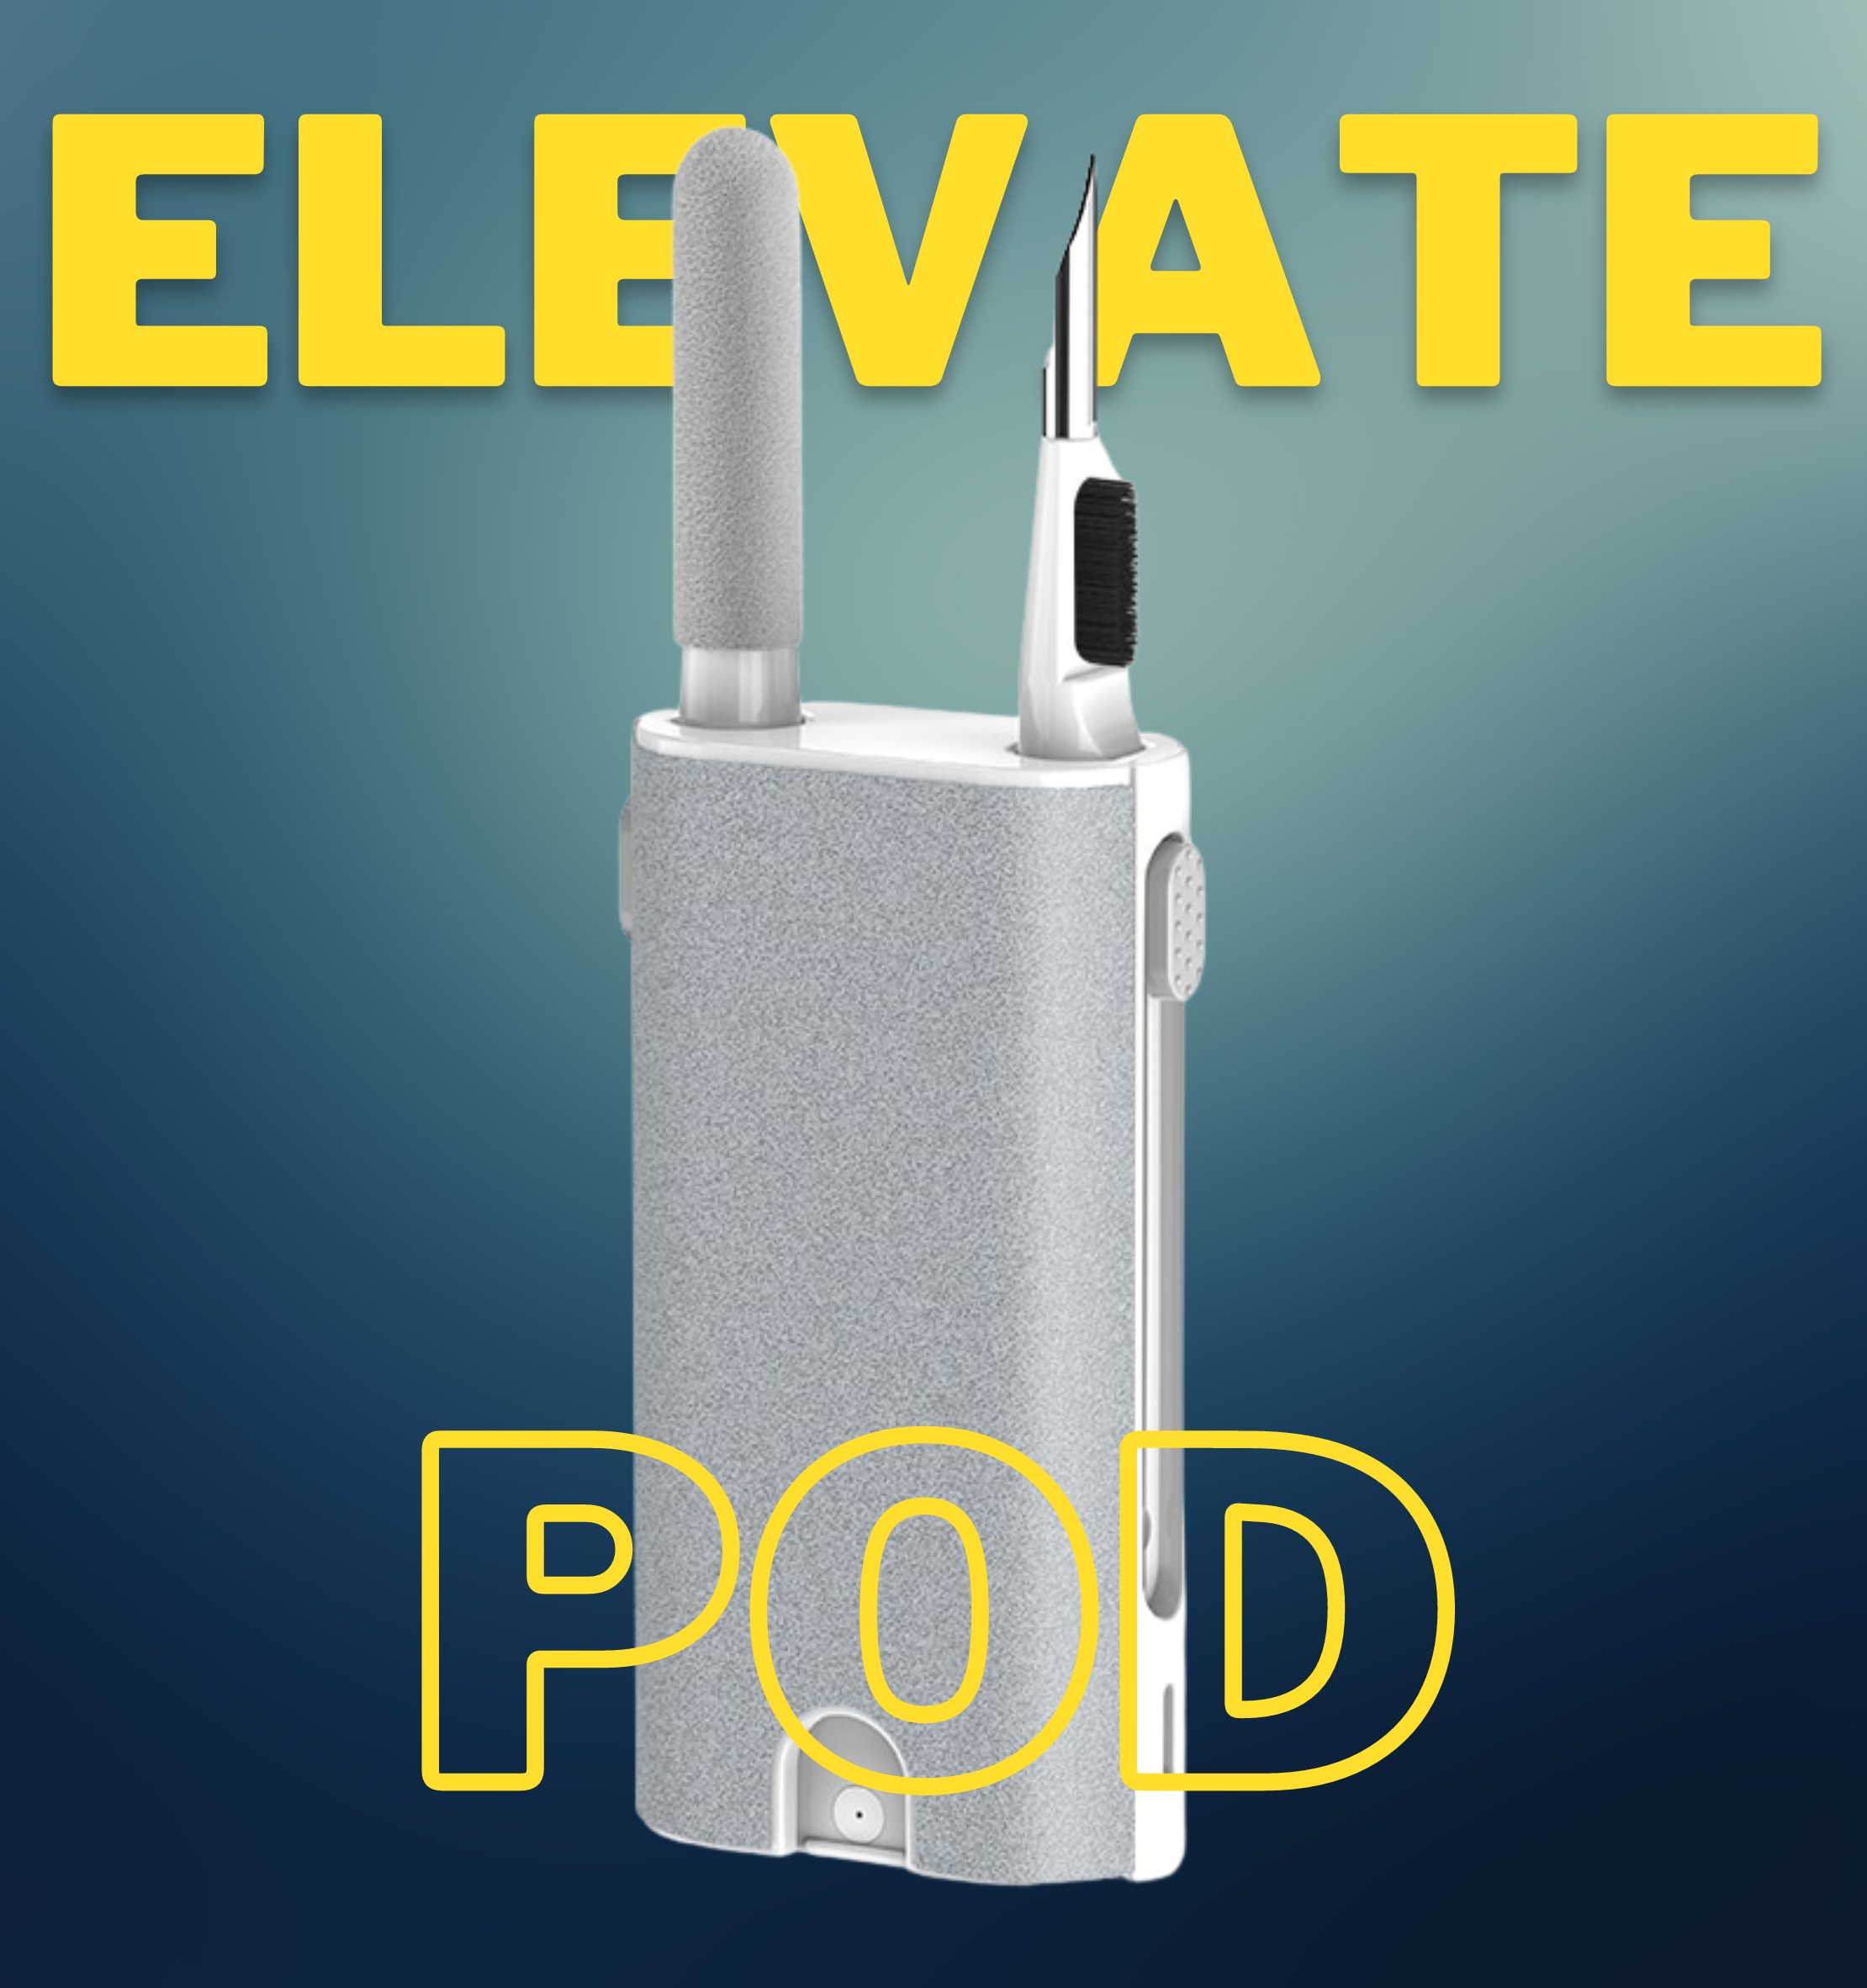 The Elevate Pod